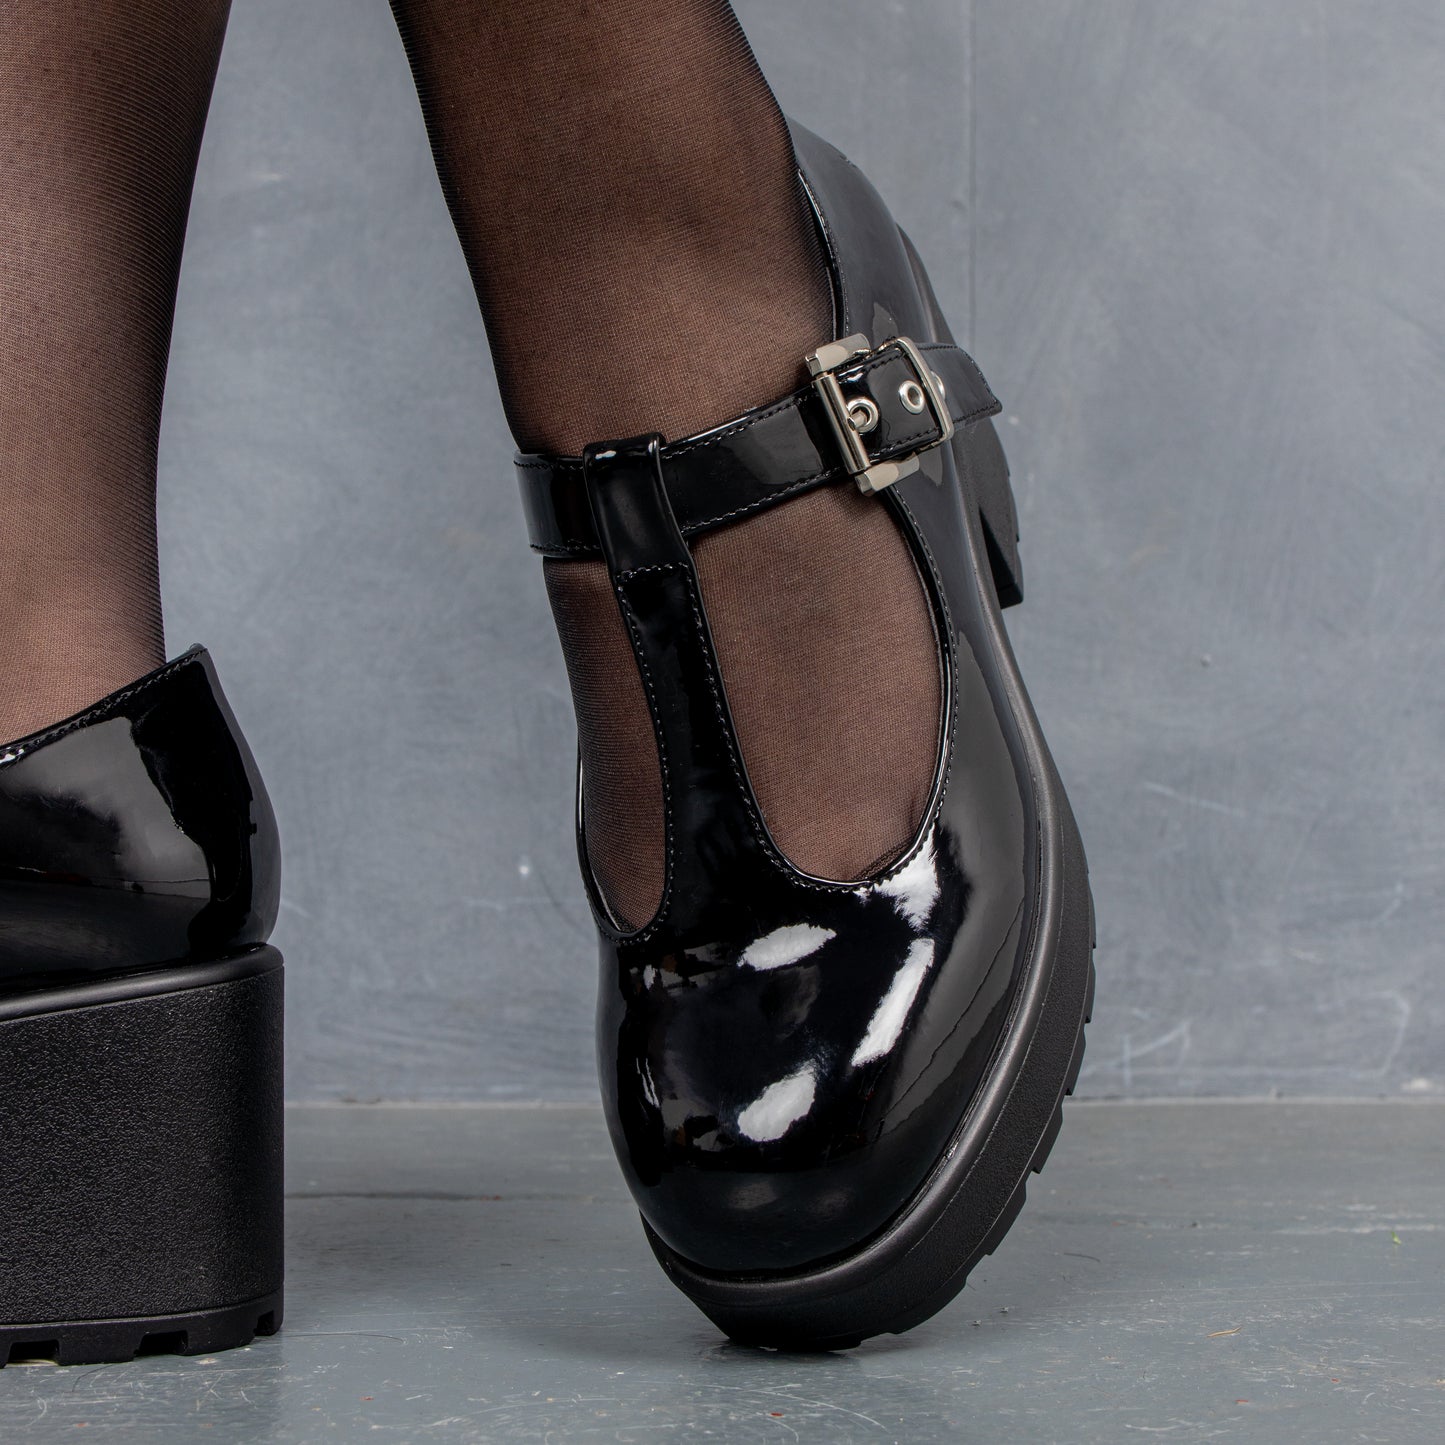 SAI Black Mary Jane Shoes 'Patent Edition' - Mary Janes - KOI Footwear - Black - Model Detail